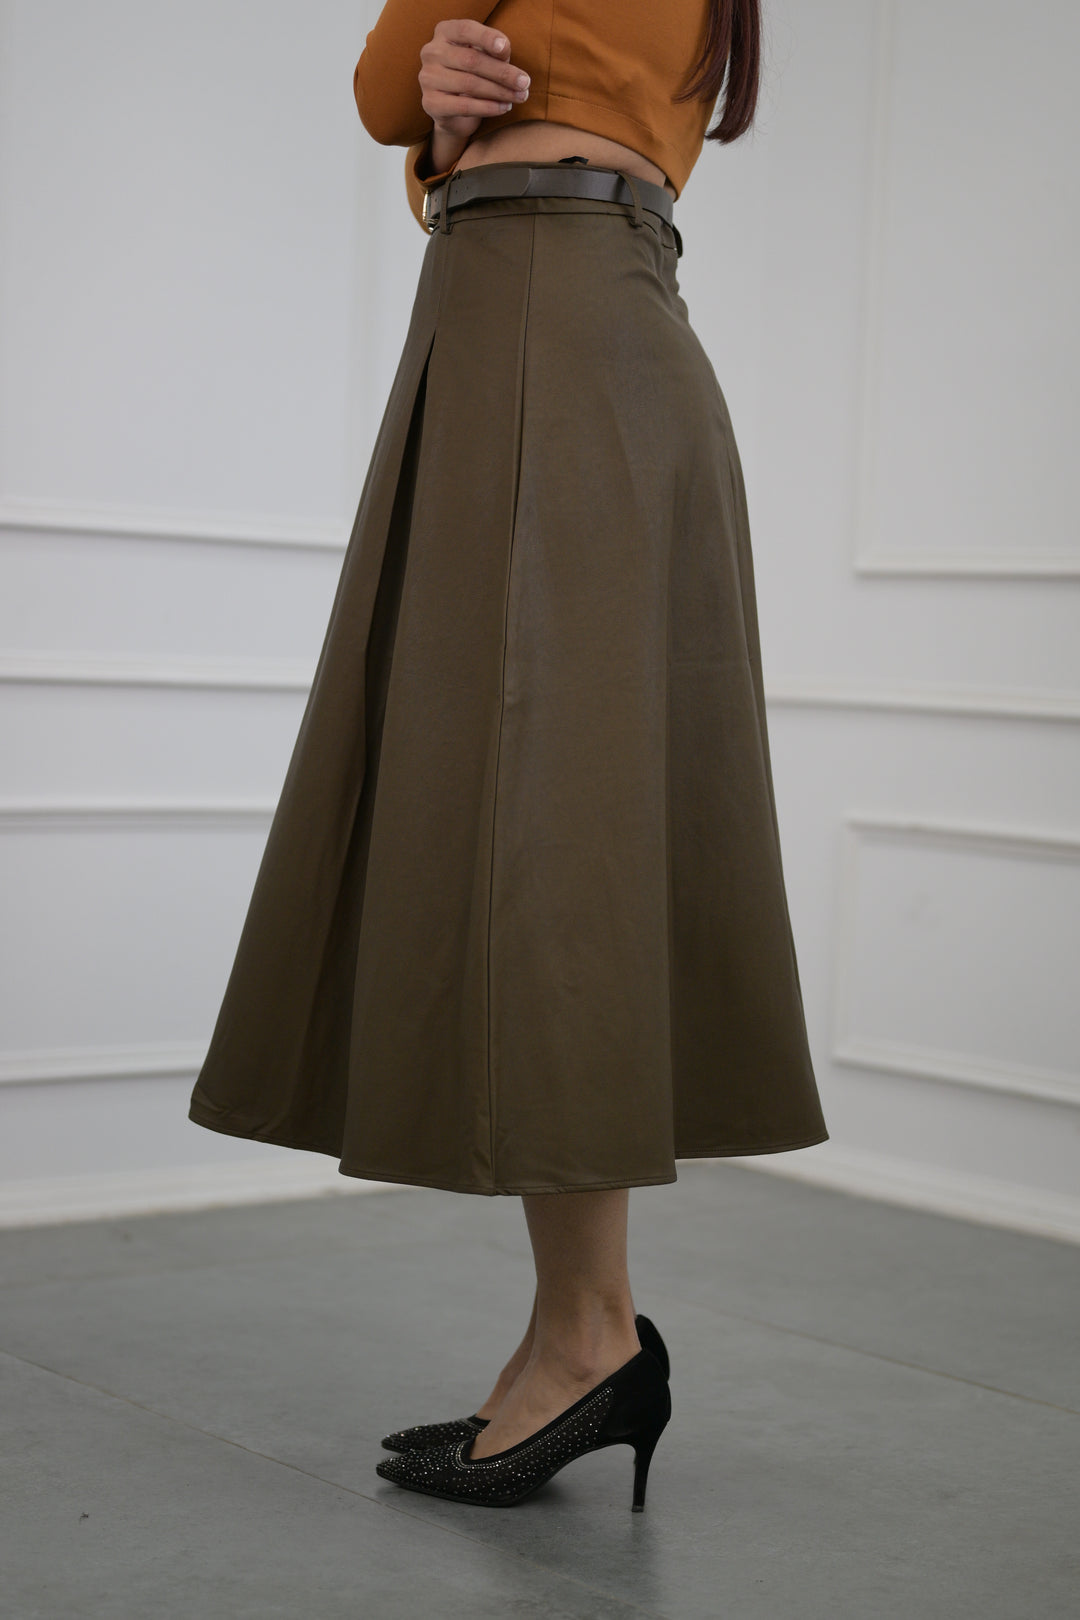 Versatile brown leather skirt for regular wear